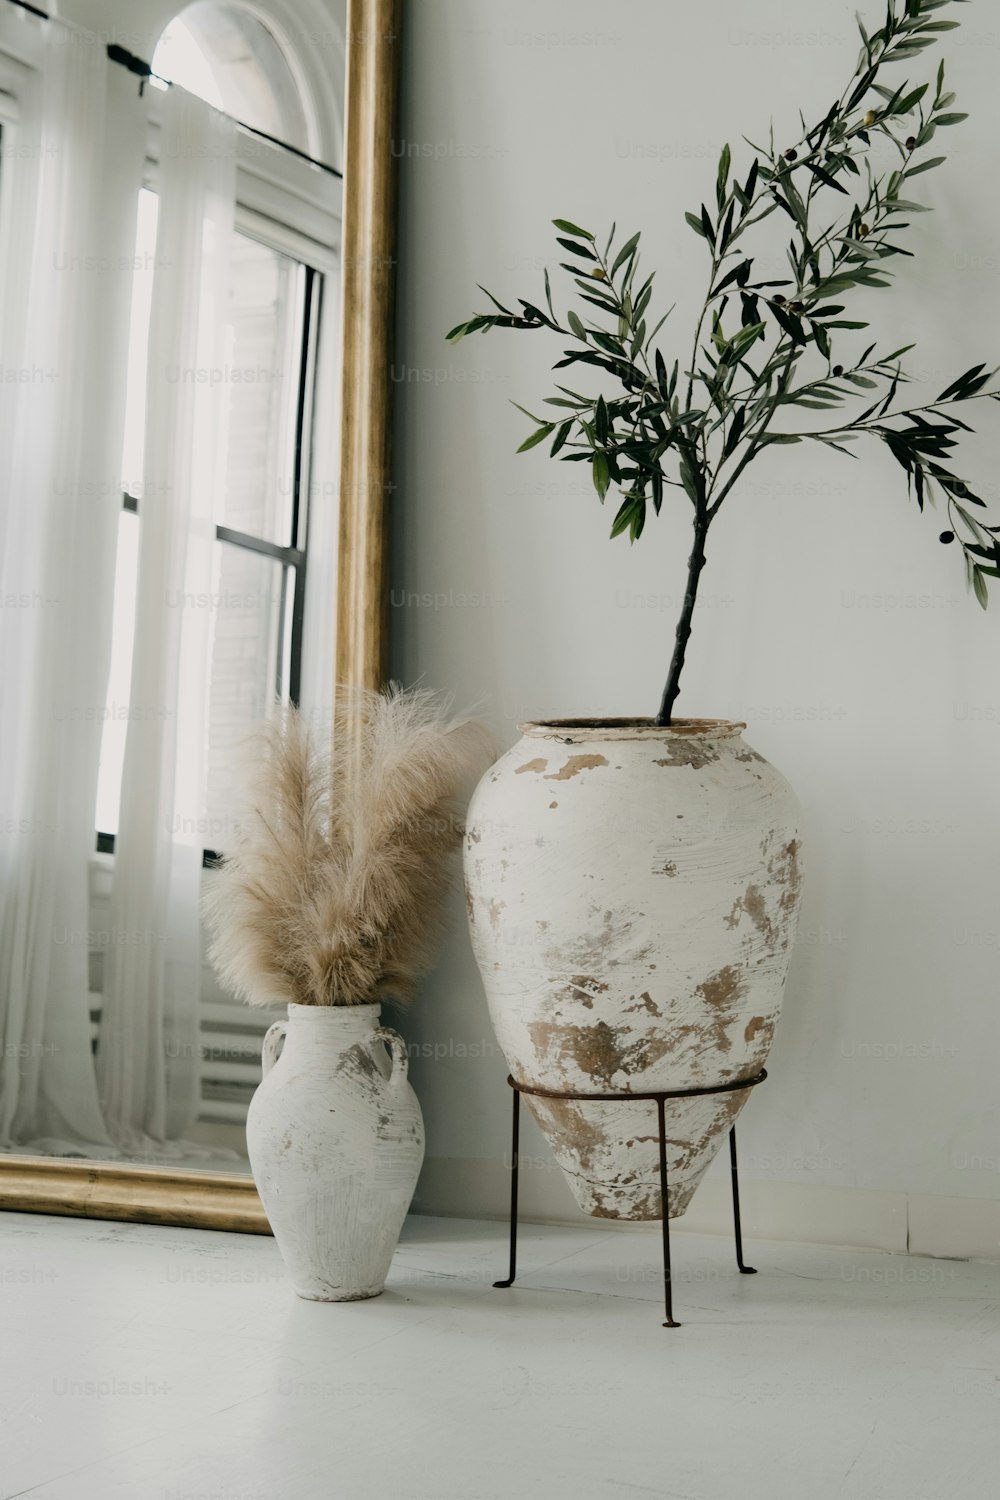 Una planta en maceta sentada junto a un espejo